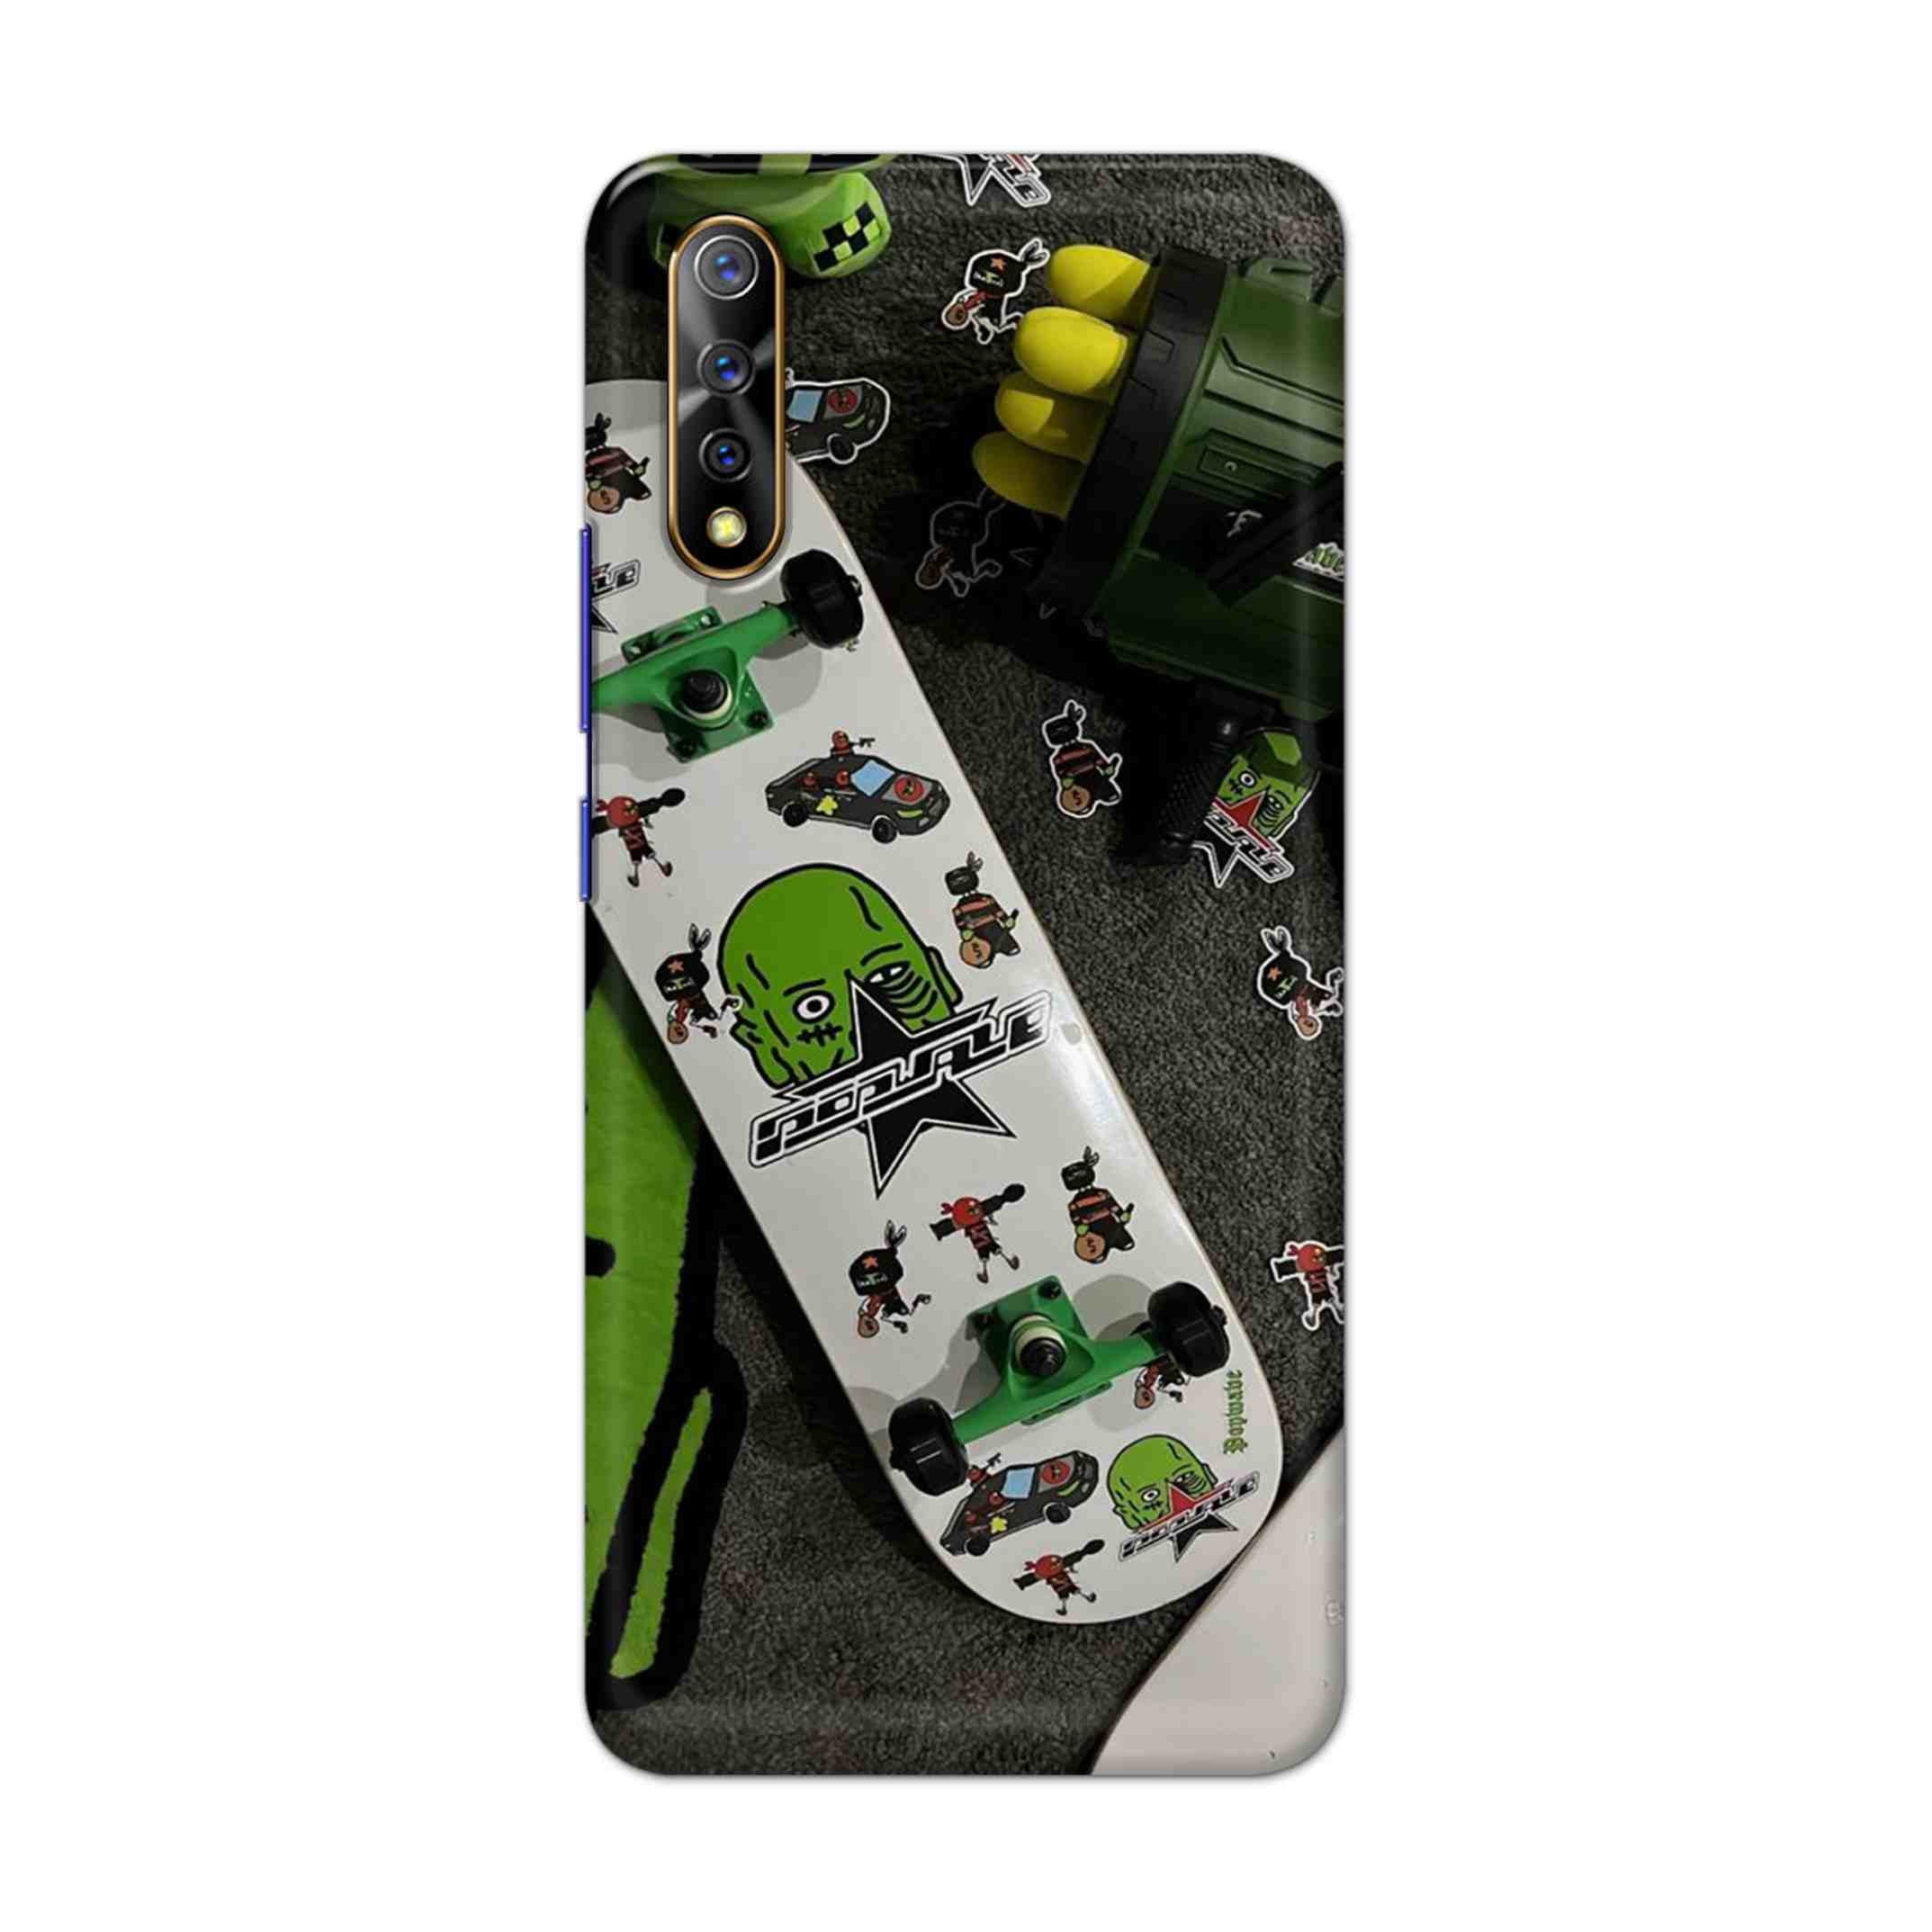 Buy Hulk Skateboard Hard Back Mobile Phone Case Cover For Vivo S1 / Z1x Online